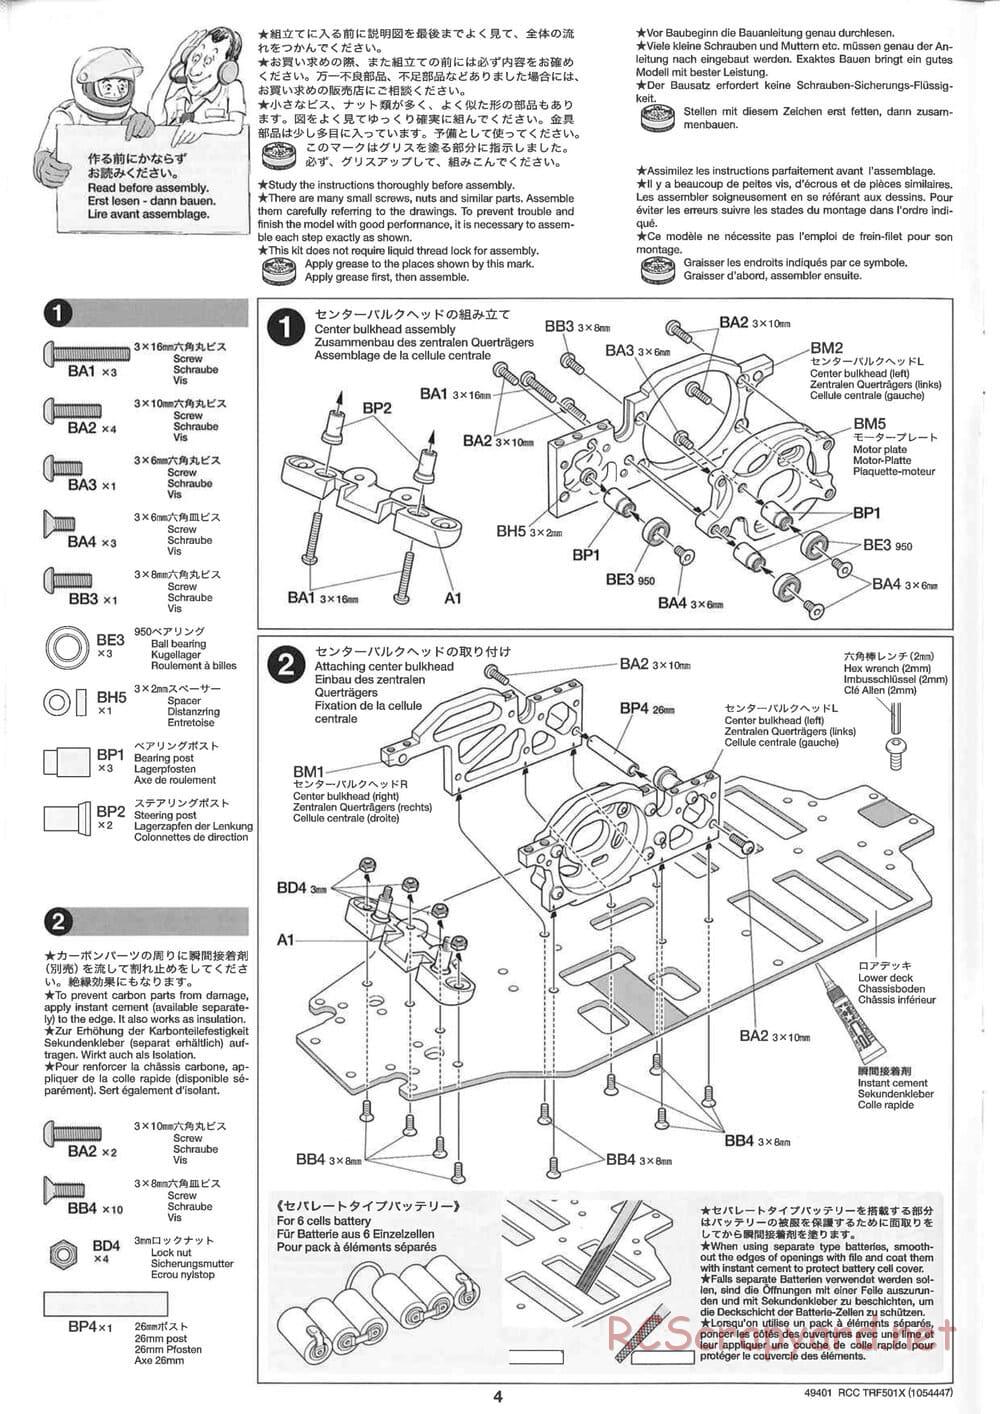 Tamiya - TRF501X Chassis - Manual - Page 4